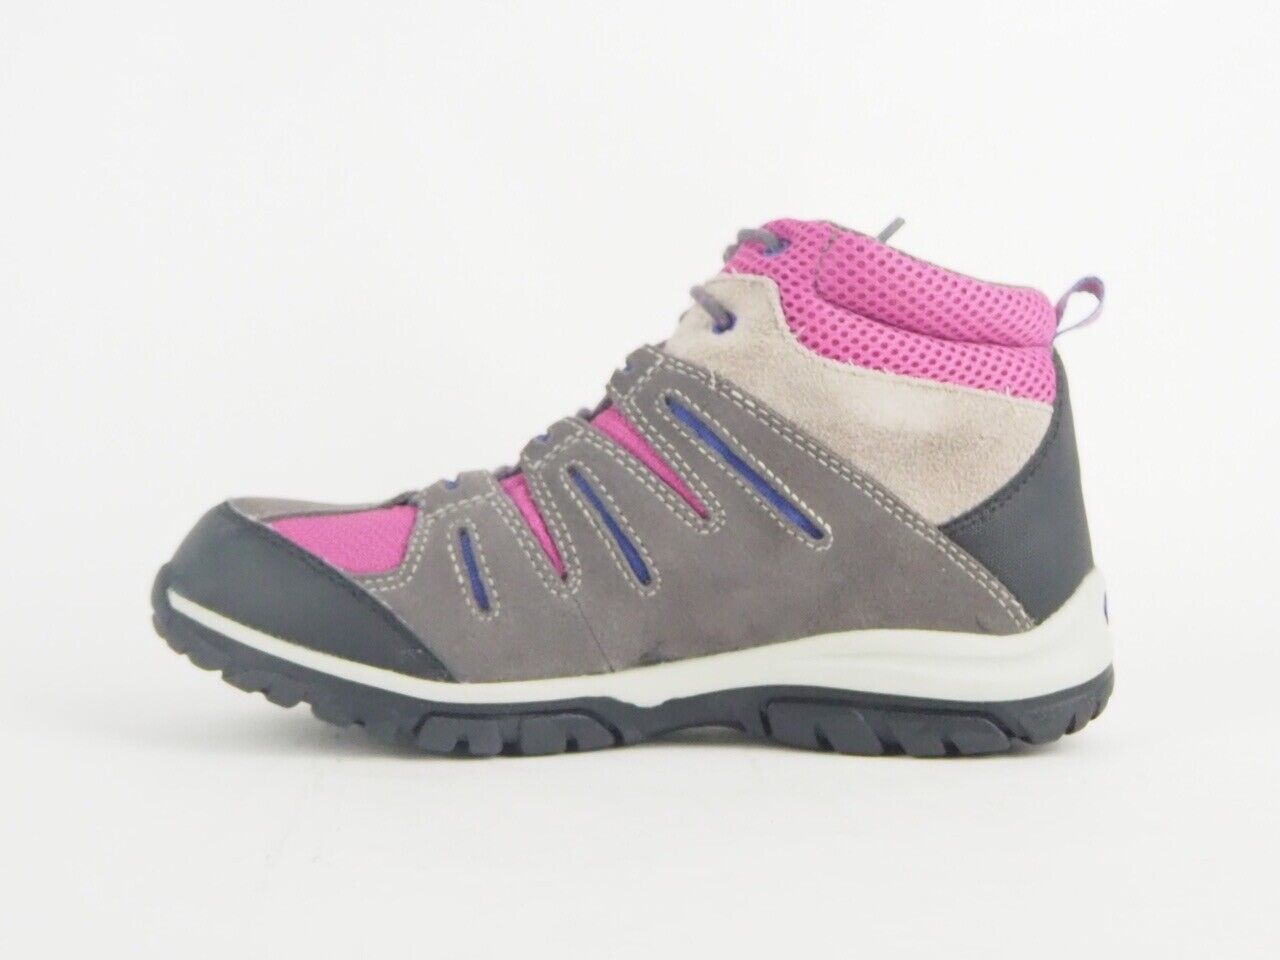 Girls Timberland Zip Trail GTX 8899R Grey Suede Hiking Walkin Boots